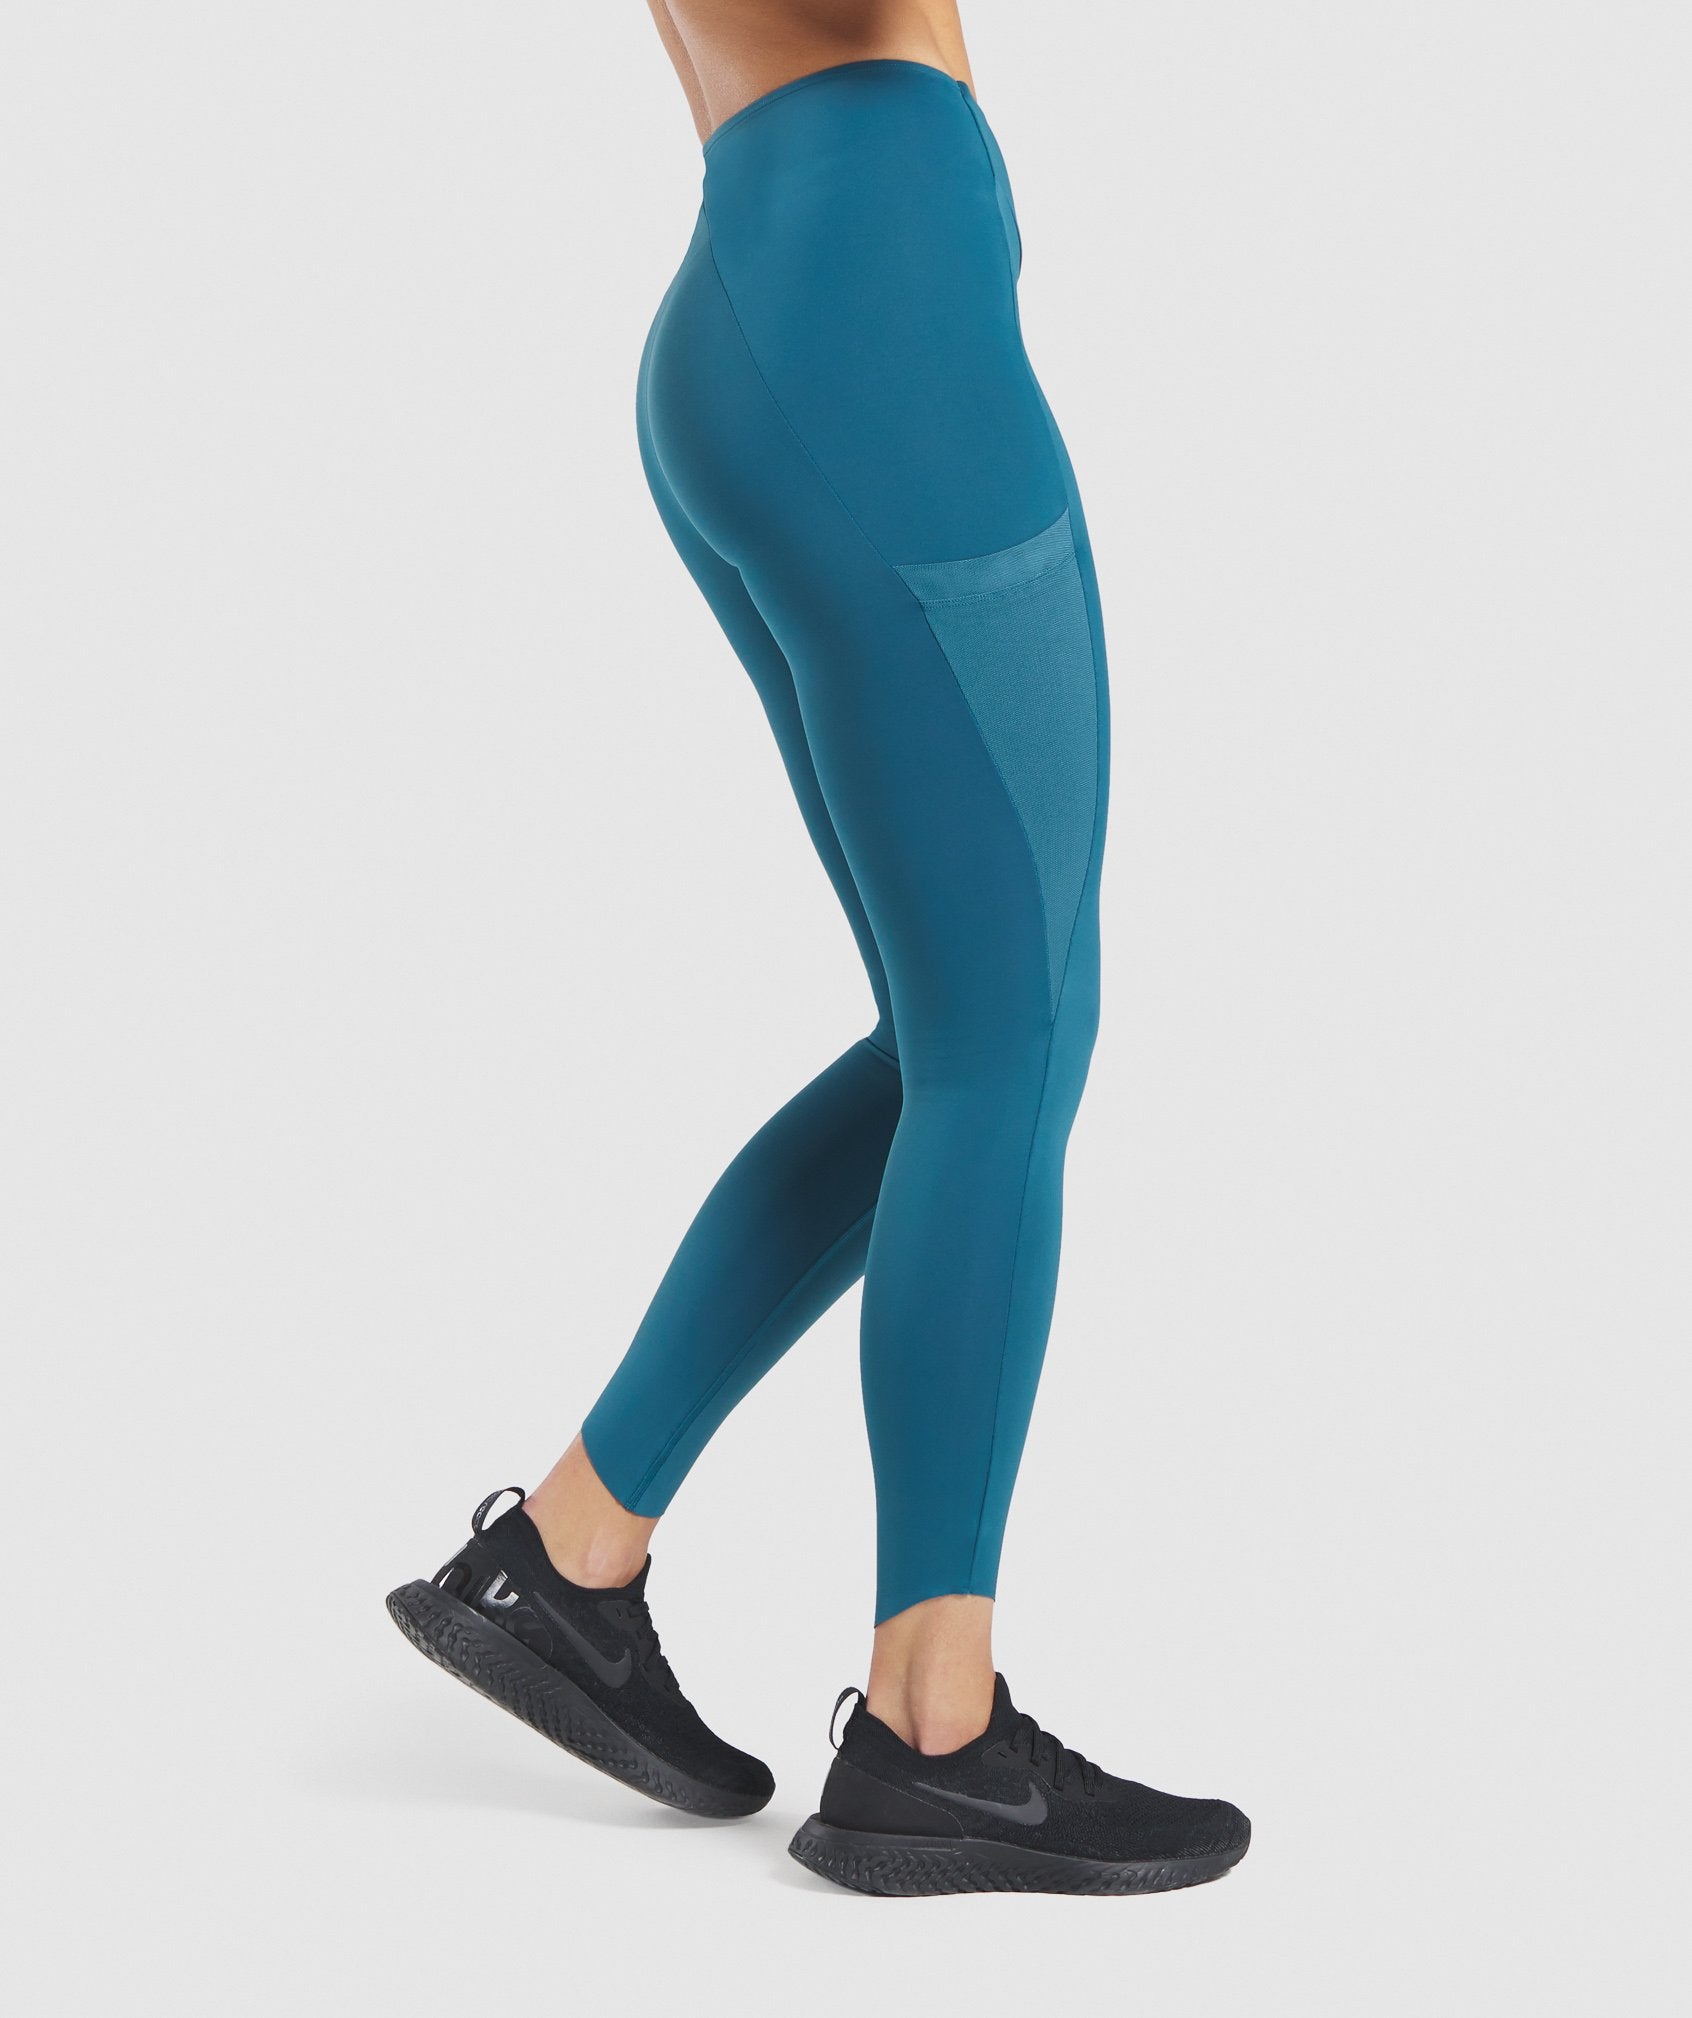 Women's High Waist Workout Yoga Pants Tight Leggings M - Walmart.com